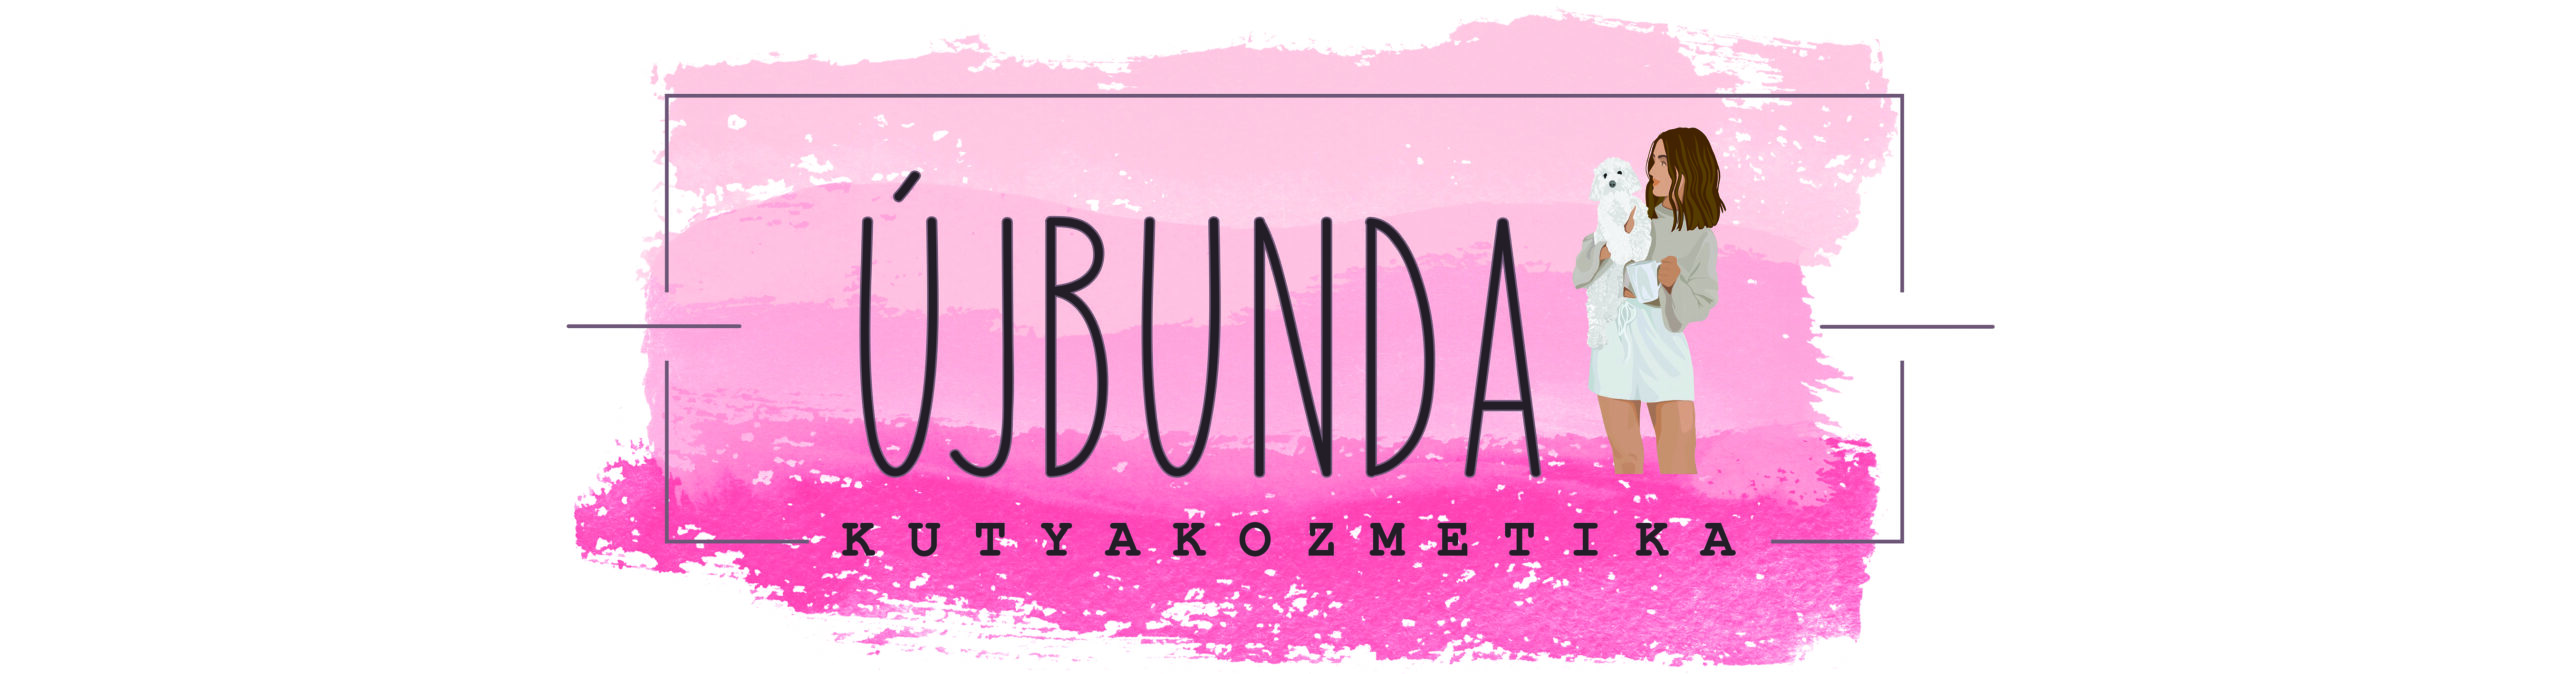 ujbunda-kutyakozmetika-logo